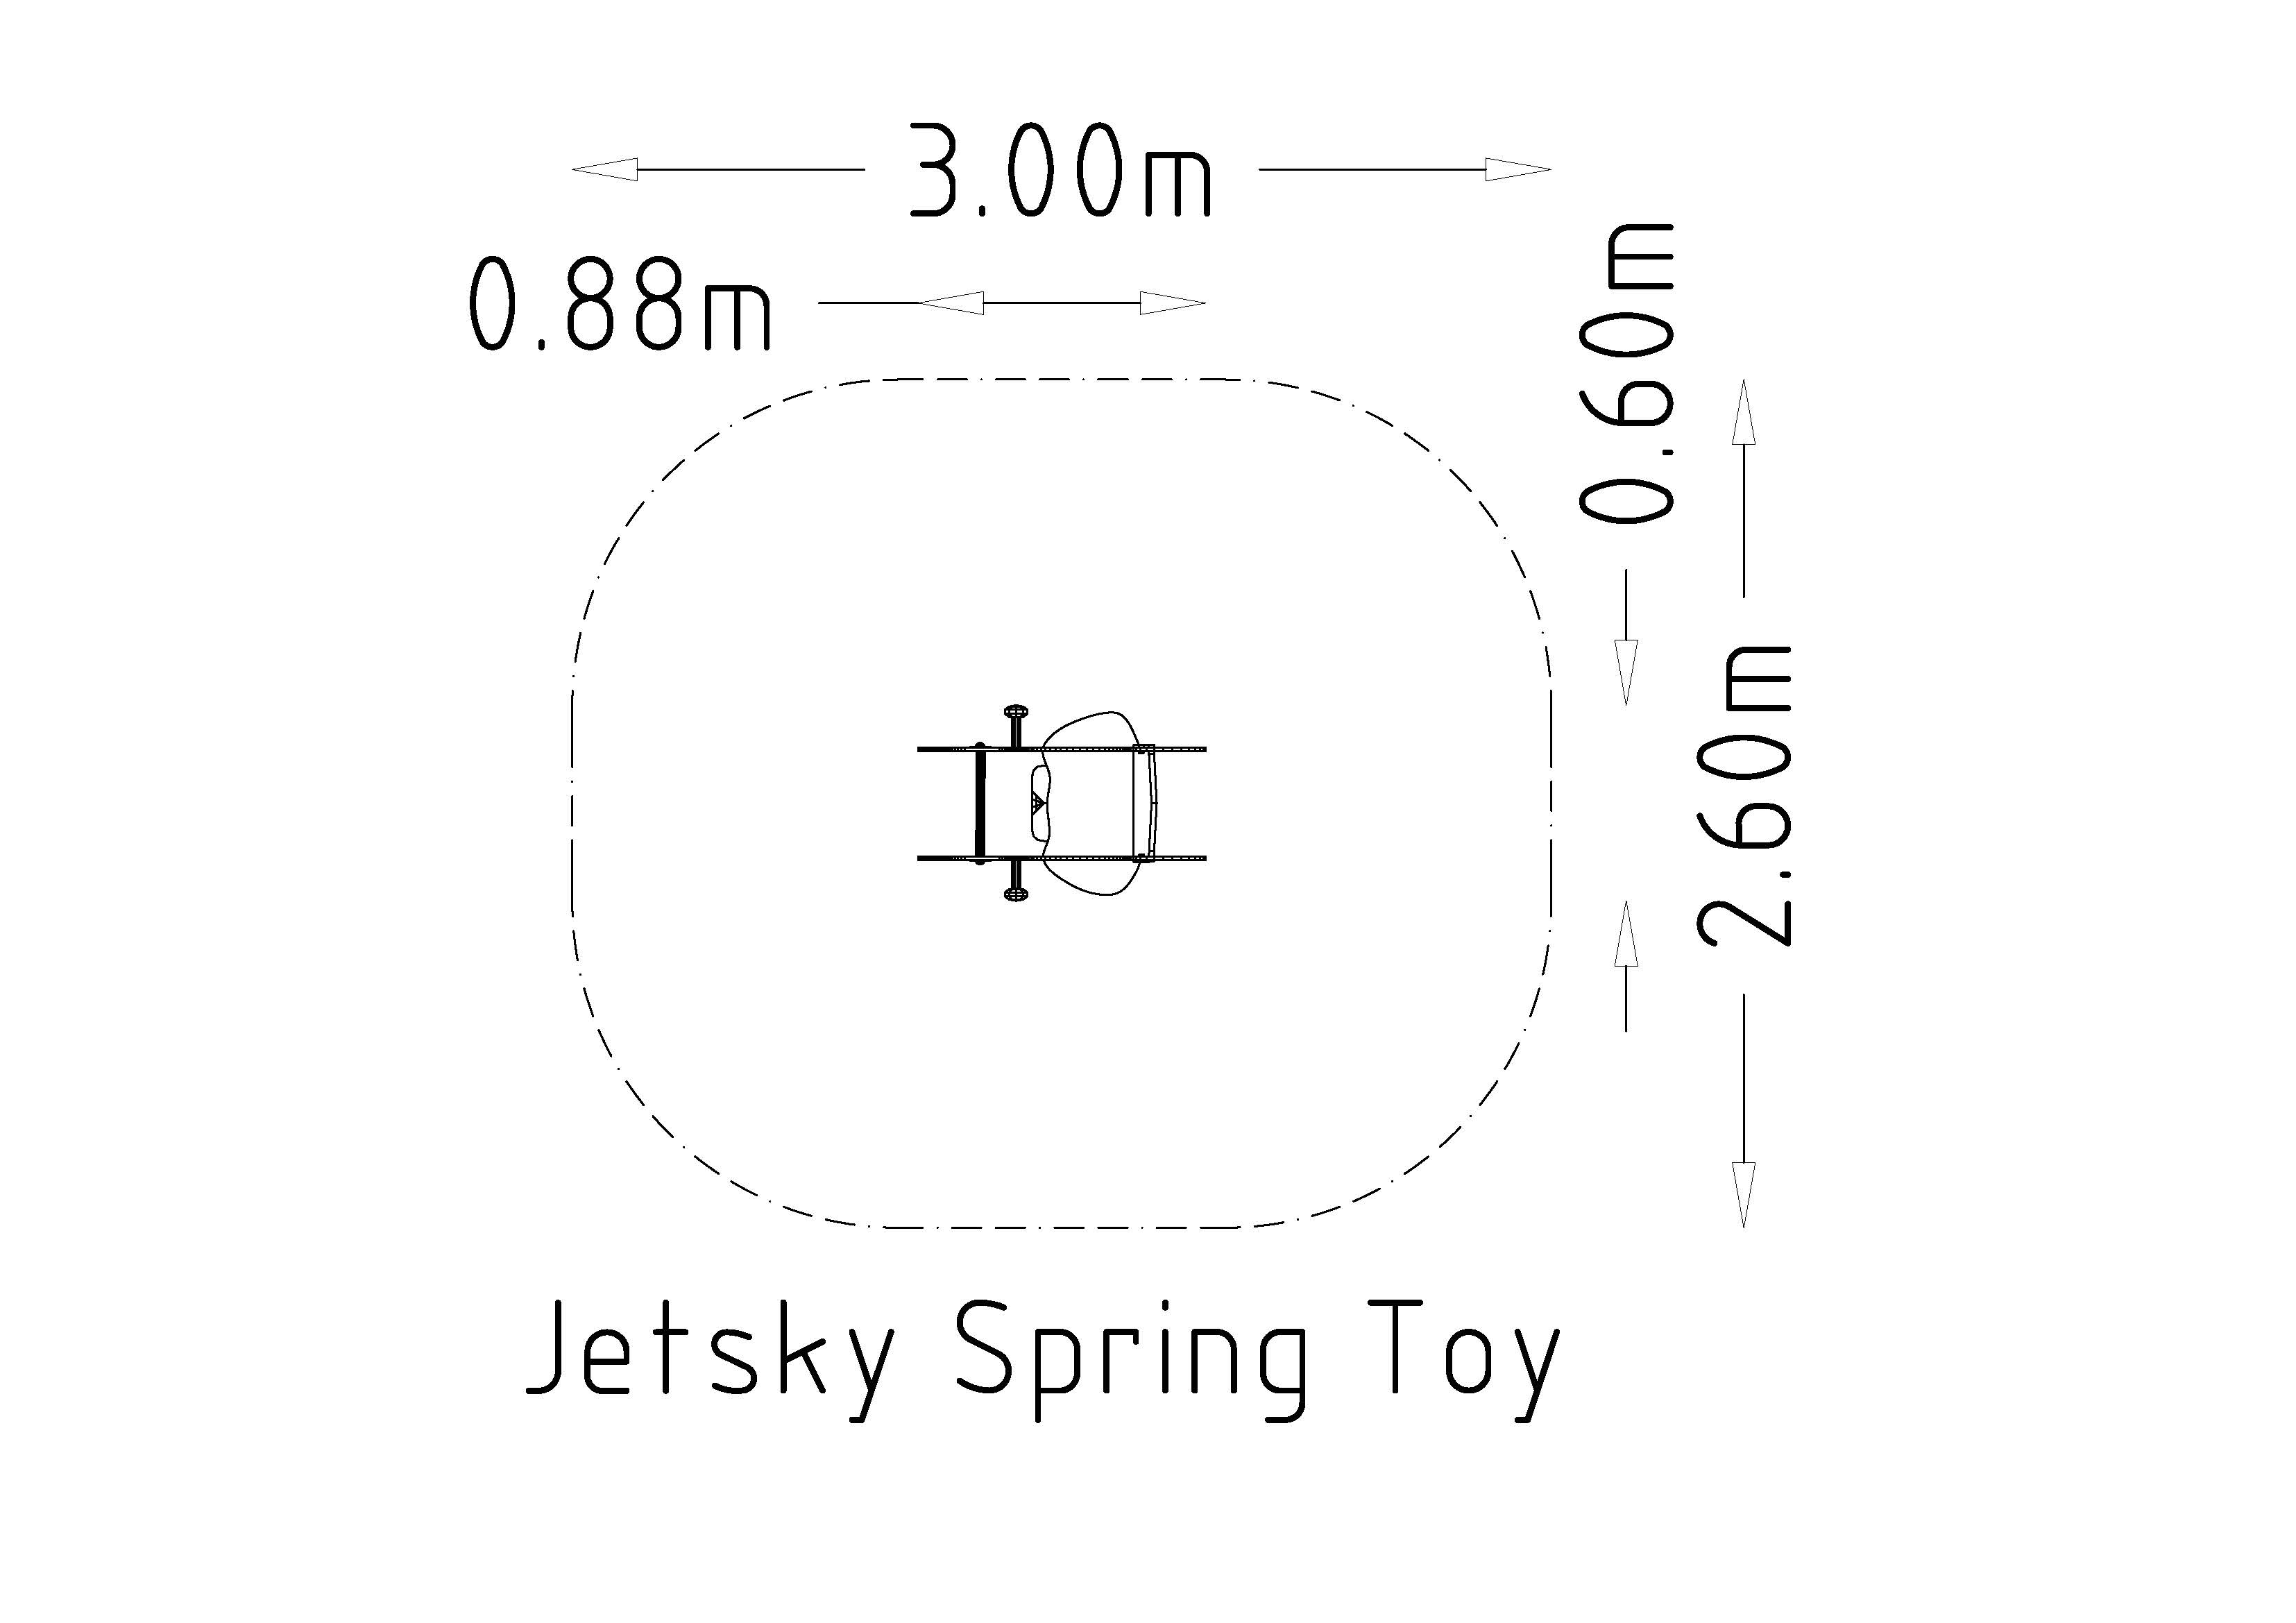 Speelgoed Jetsky